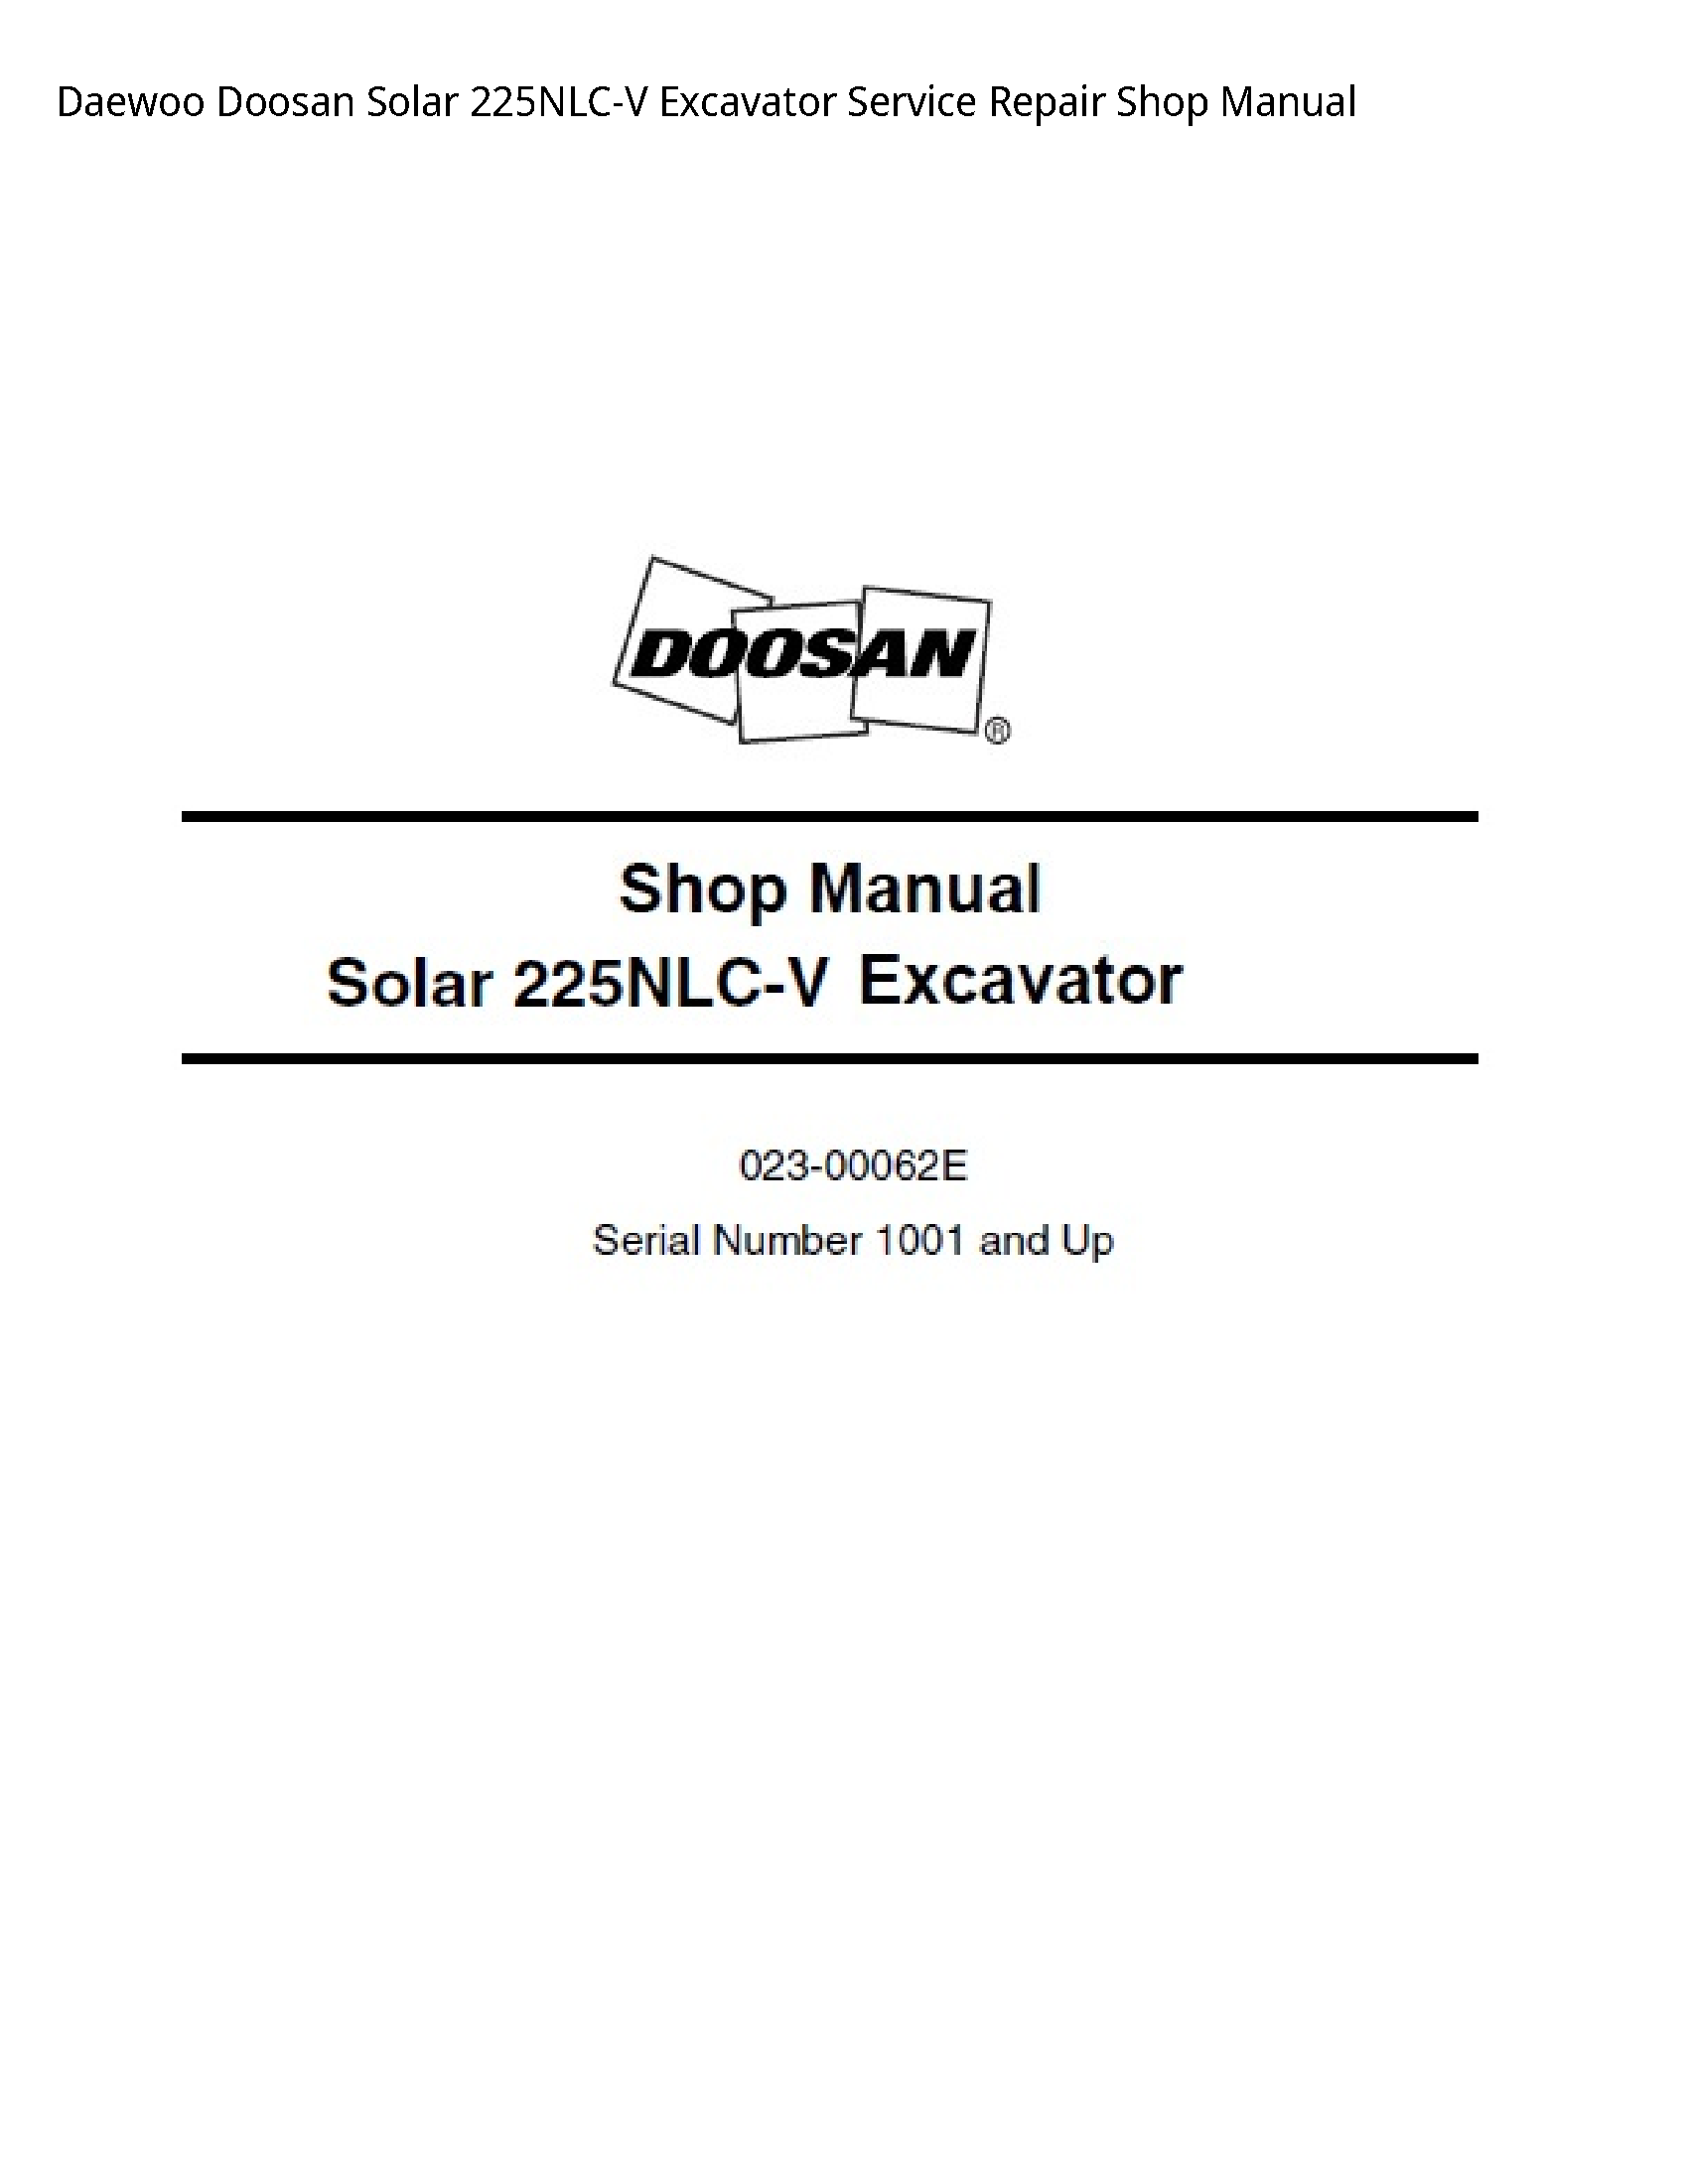 Daewoo Doosan 225NLC-V Solar Excavator manual